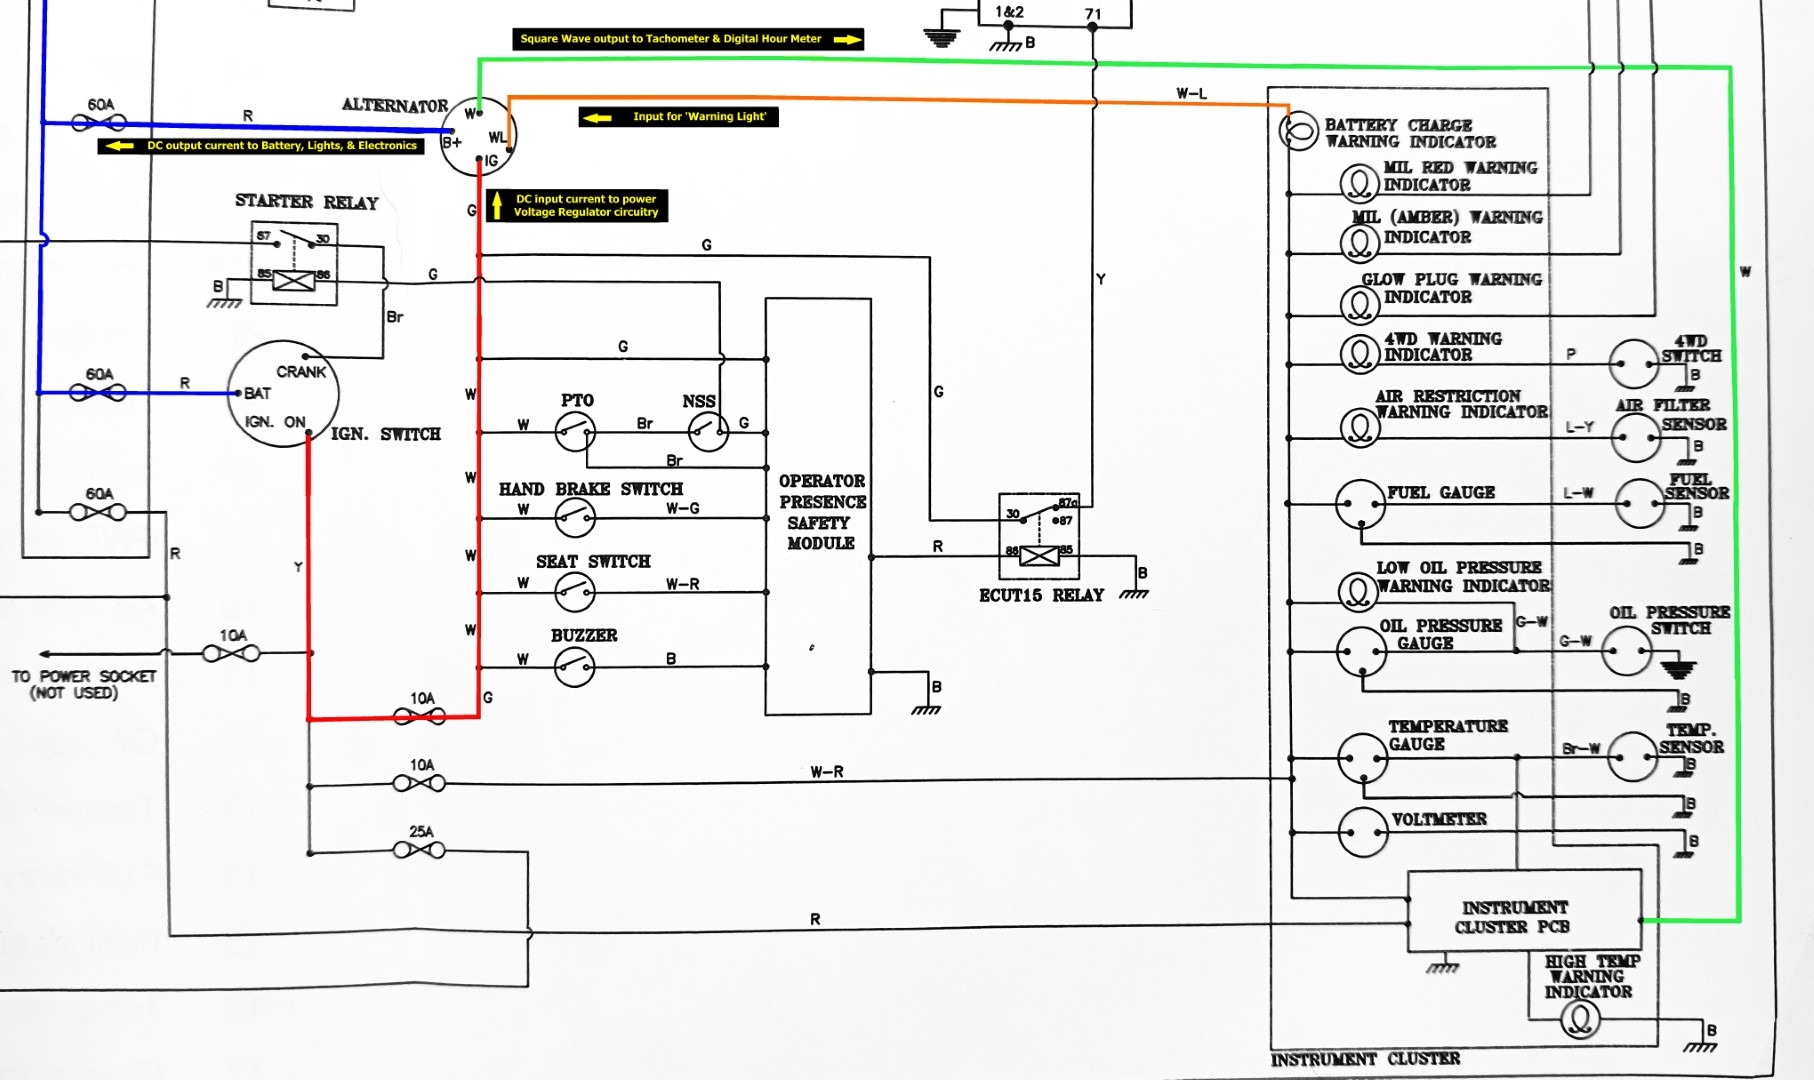 Circuit Diagram_MF2600 Alternator (Large).jpg